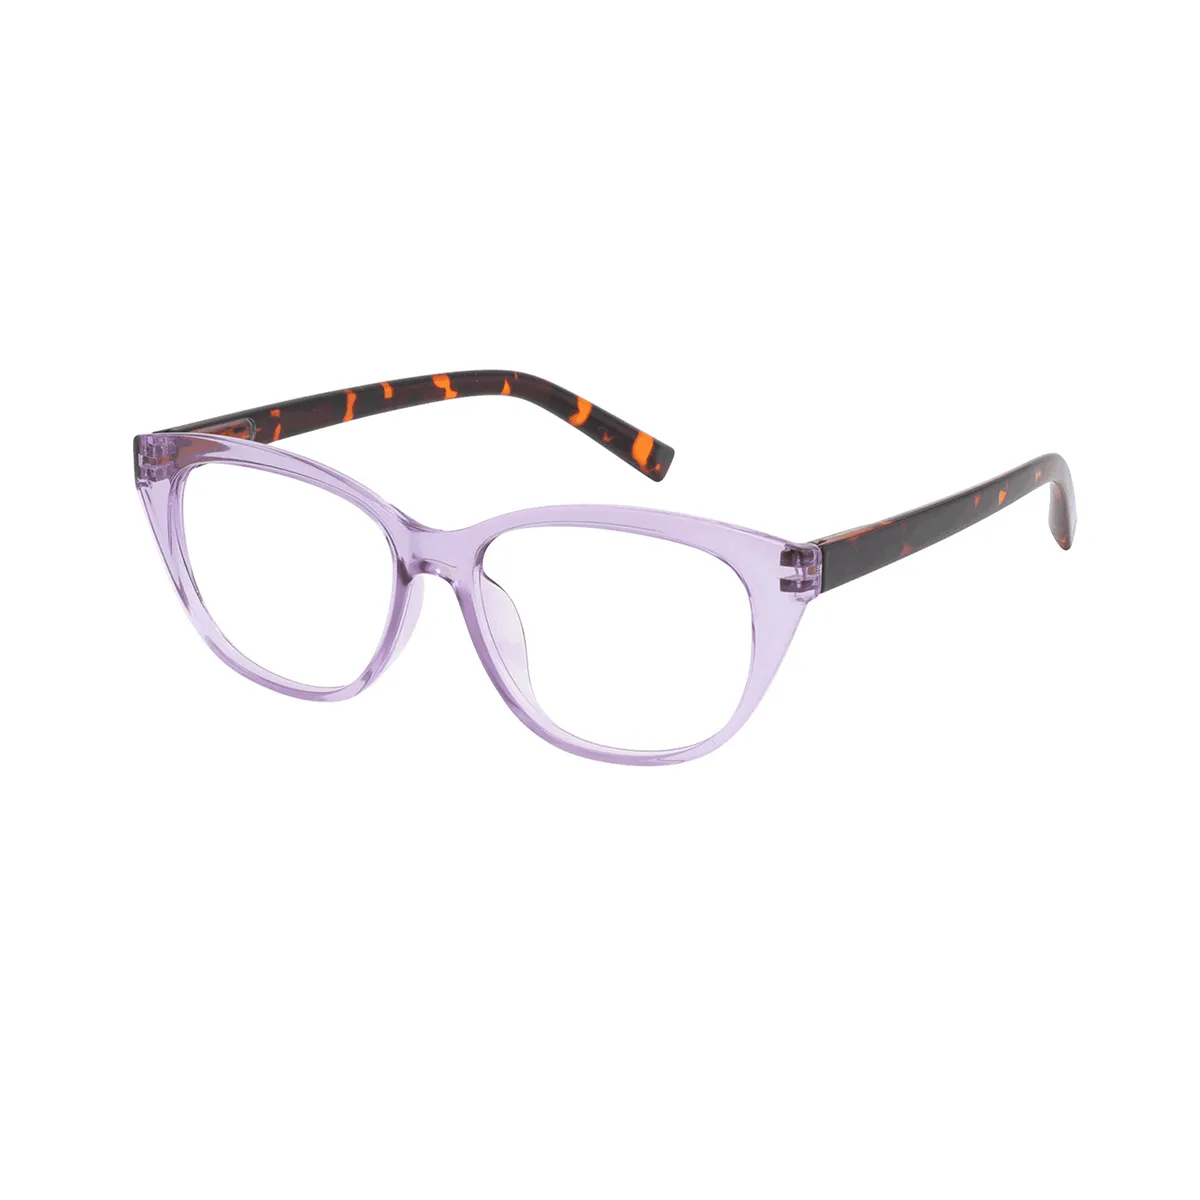 Fashion Cat-eye Translucent Glasses for Women